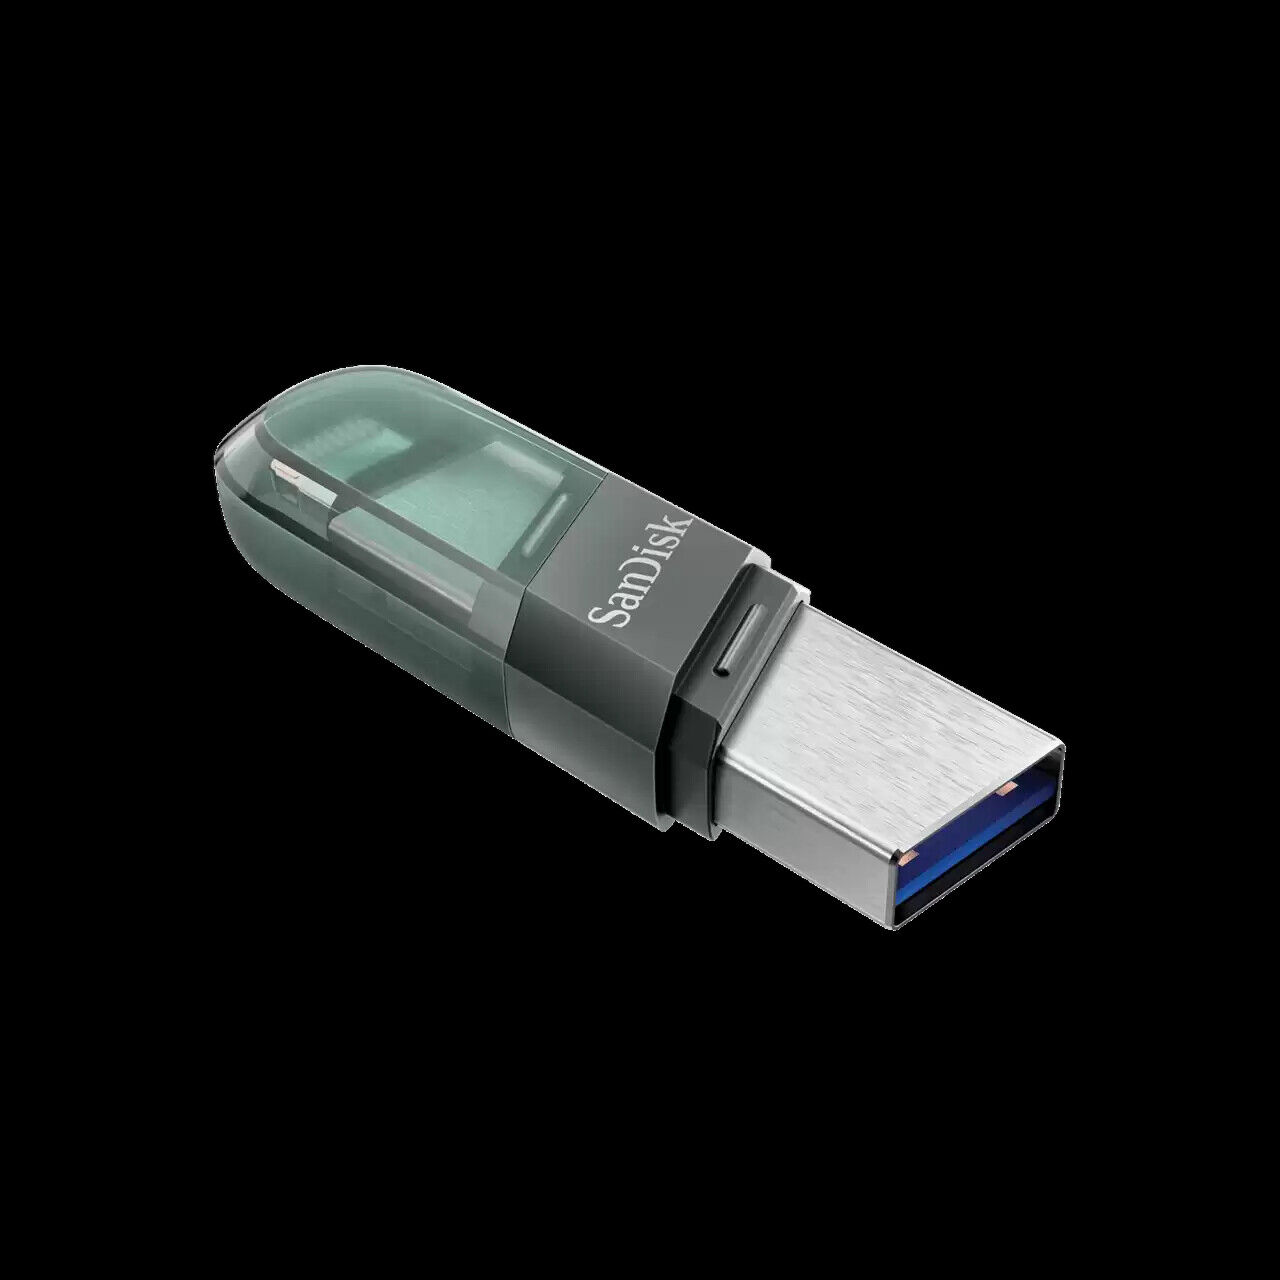 SanDisk 32GB iXpand Flash Drive Flip, Sea Green - SDIX90N-032G-GN6NN